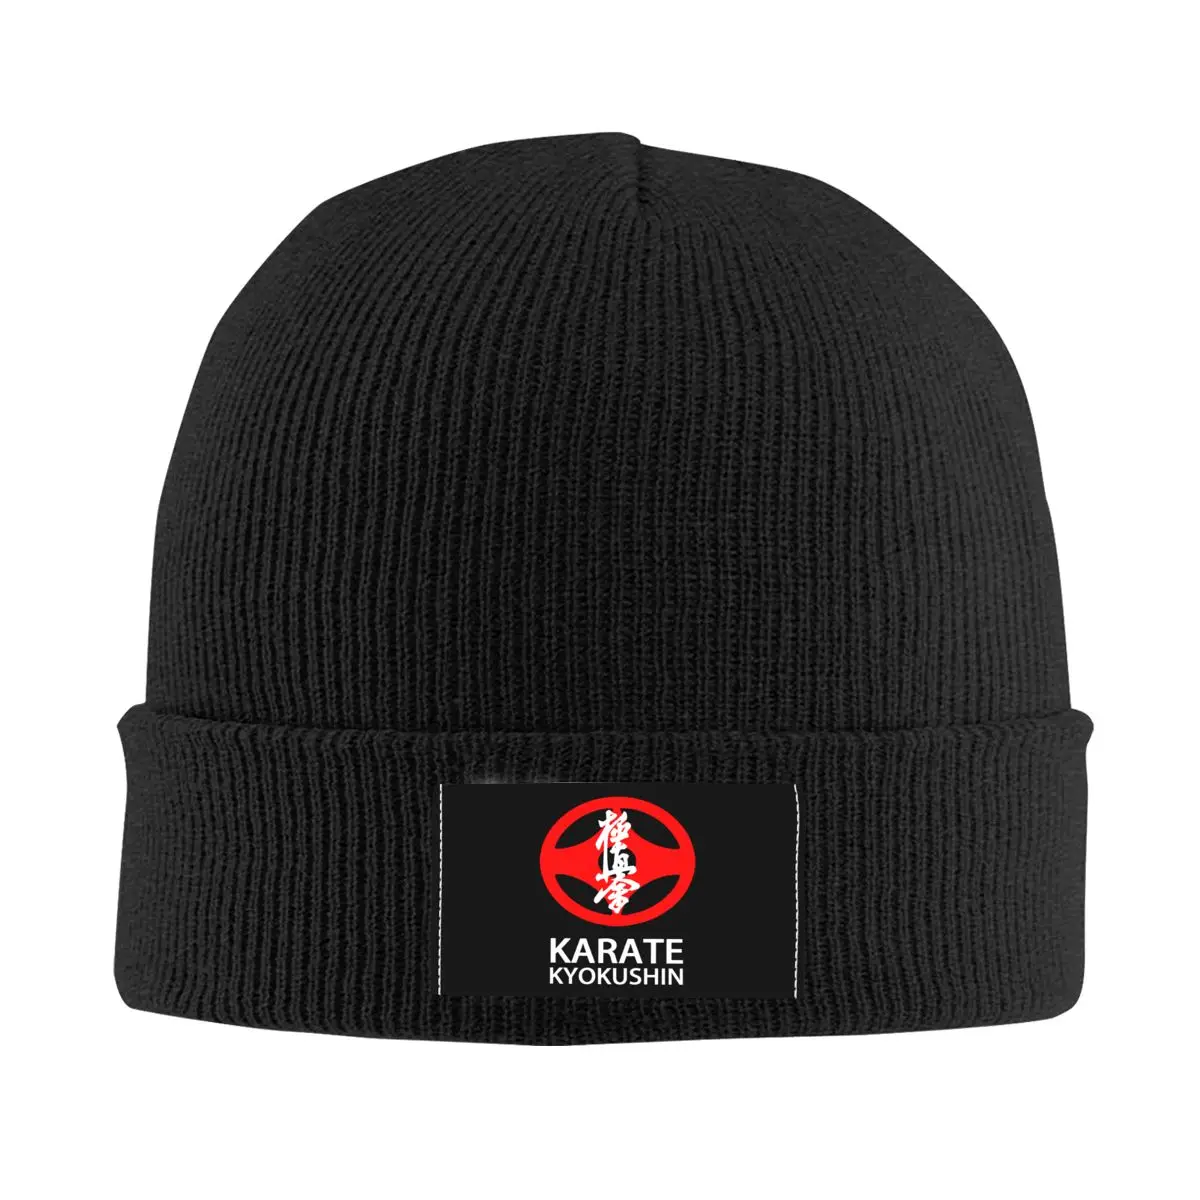 Karate Kyokushin Skullies Beanies Caps For Men Women Unisex Cool Winter Warm Knitted Hat Adult Martial Arts Bonnet Hats 1